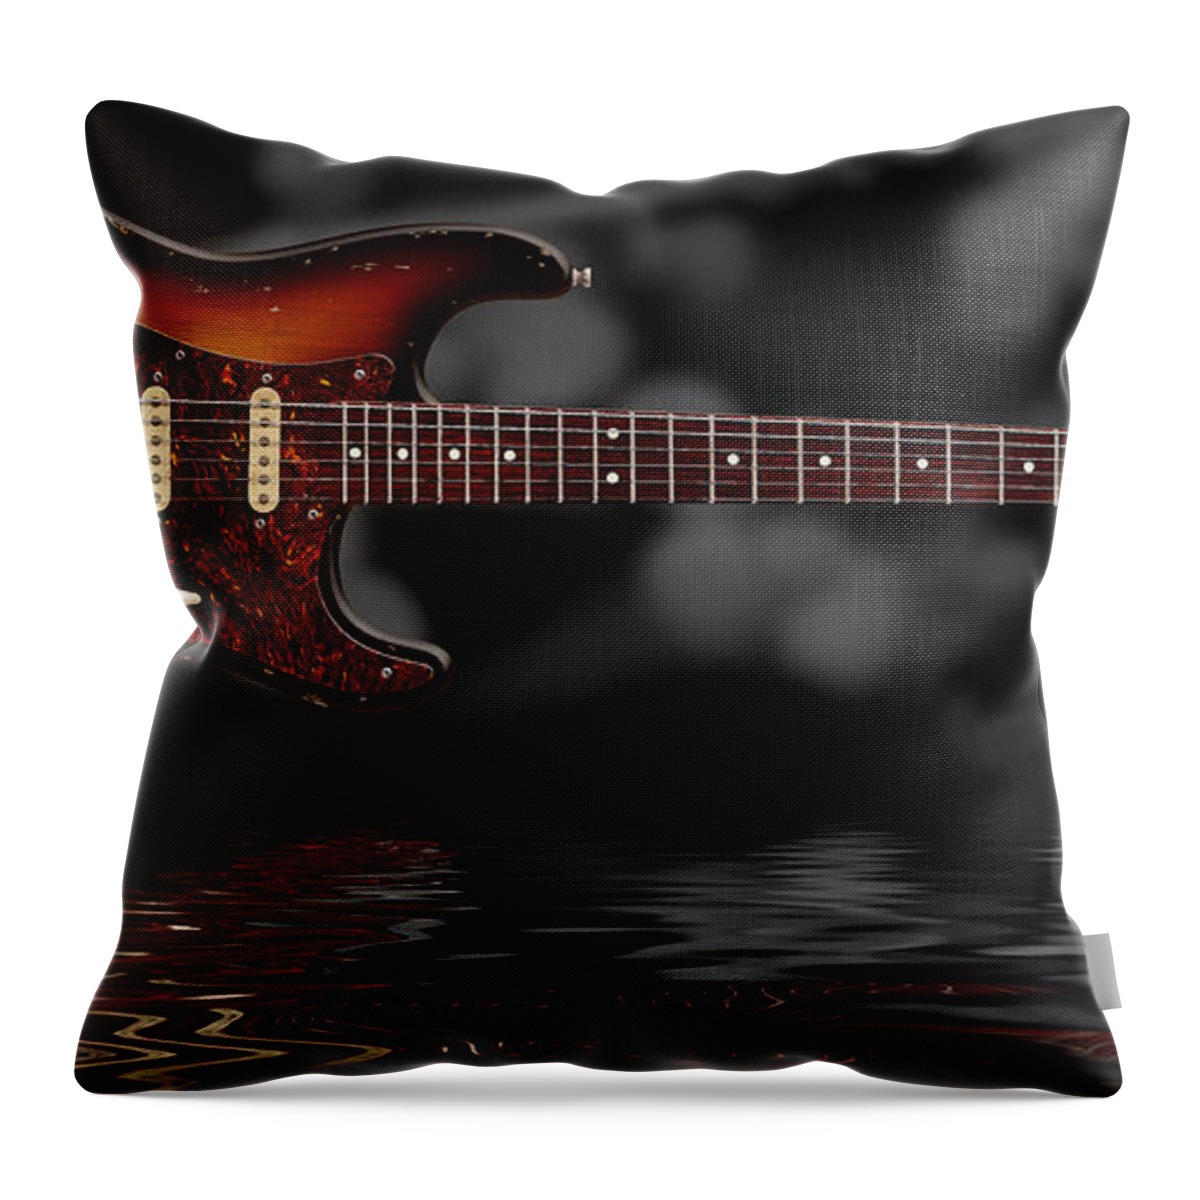 Strat Throw Pillow featuring the digital art Sunburst Blues by WB Johnston